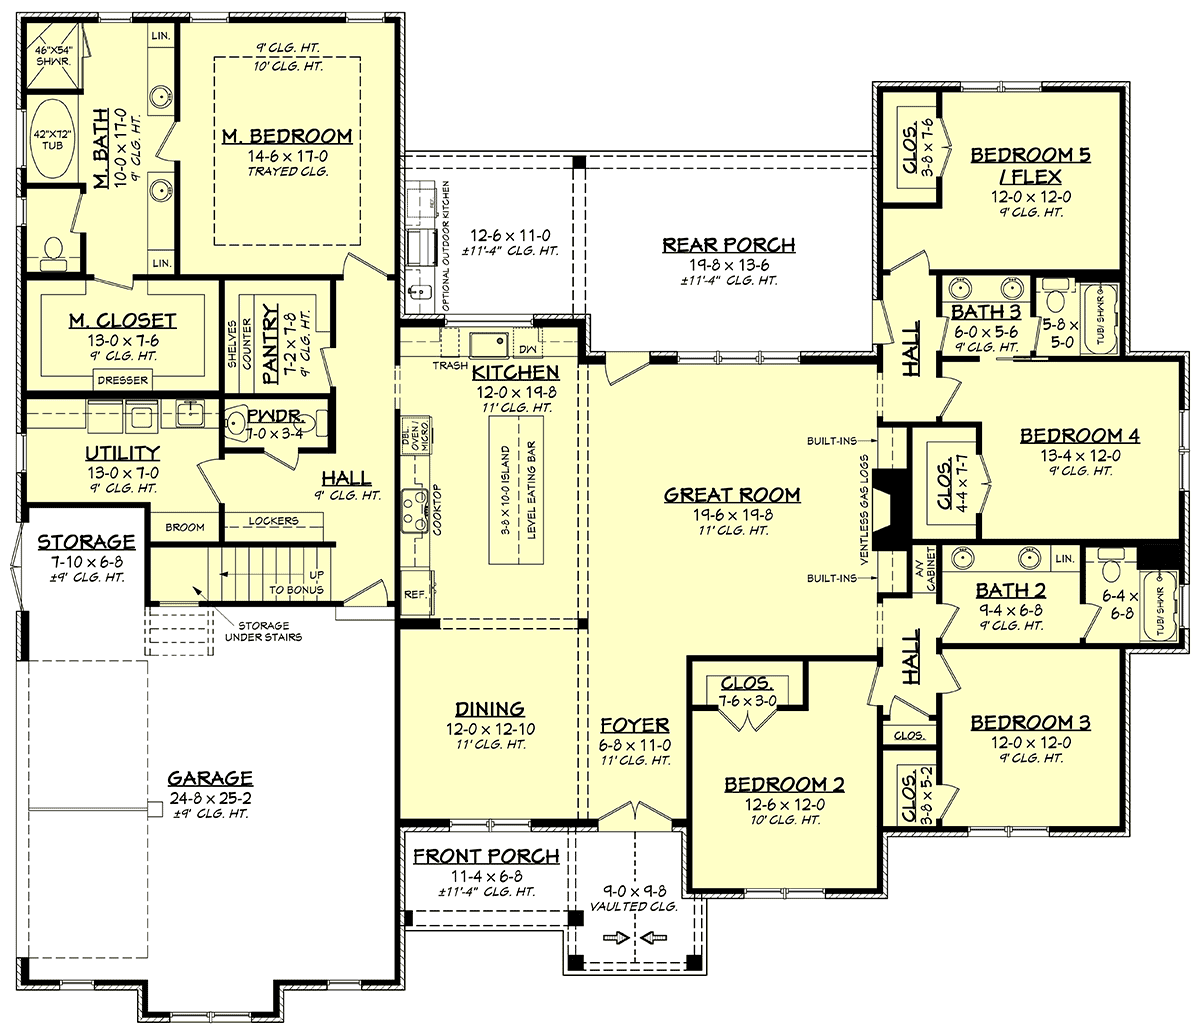 2,932 sqft Model 1A 40x32 House PDF Floor Plan 5 bedroom 4 Bath 